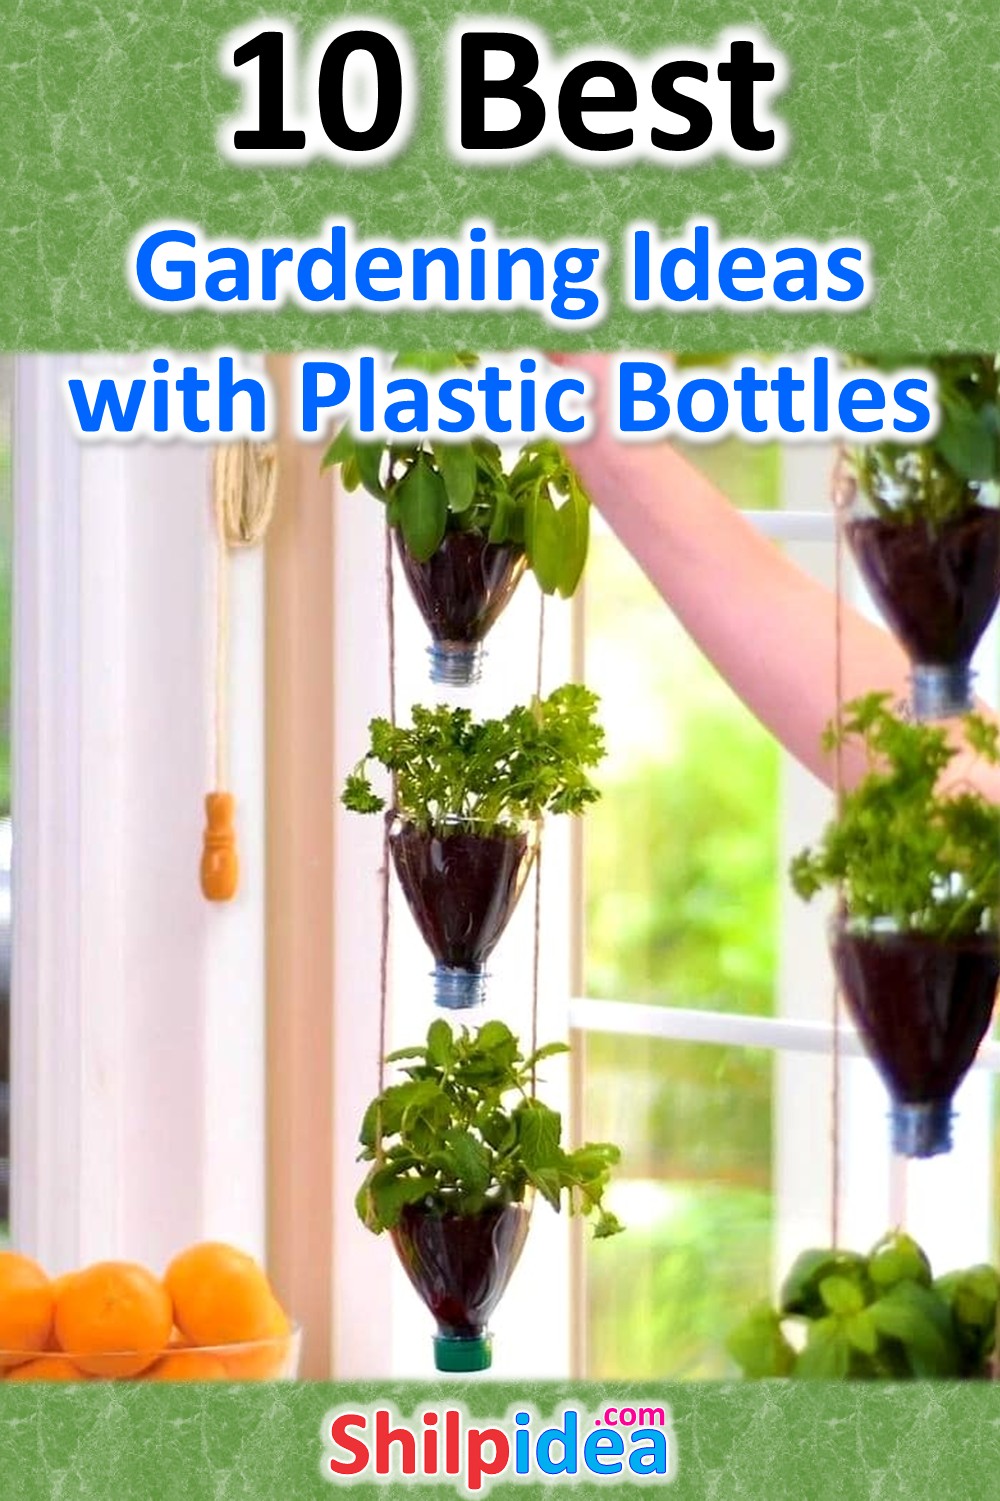 gardening-ideas-plastic-bottle-shilpidea-pin